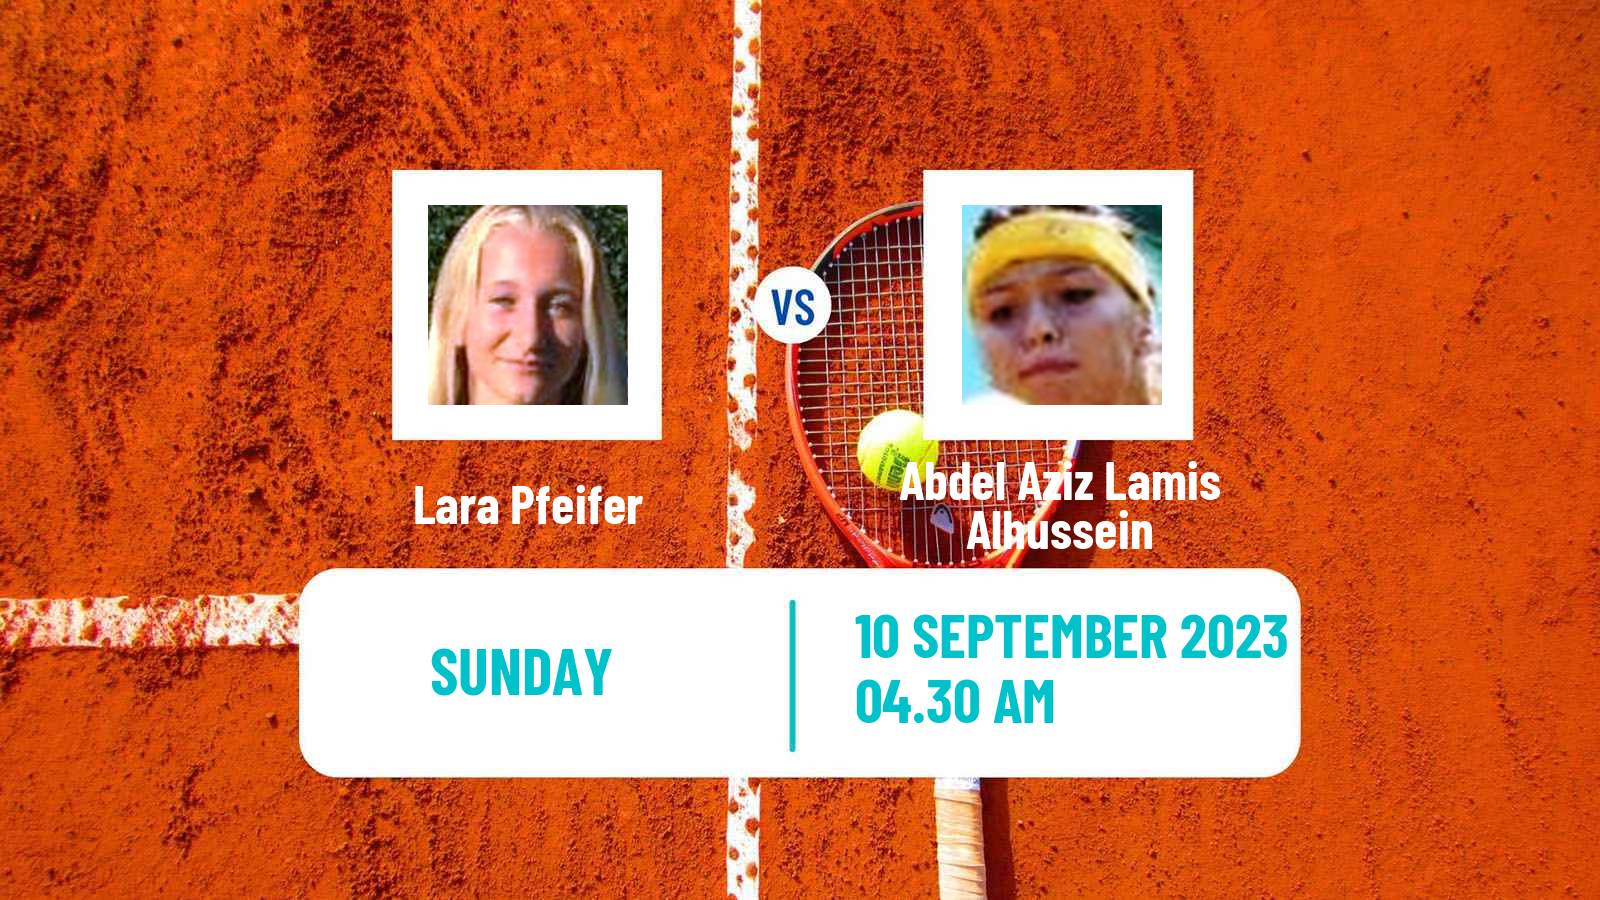 Tennis ITF W15 Monastir 31 Women Lara Pfeifer - Abdel Aziz Lamis Alhussein